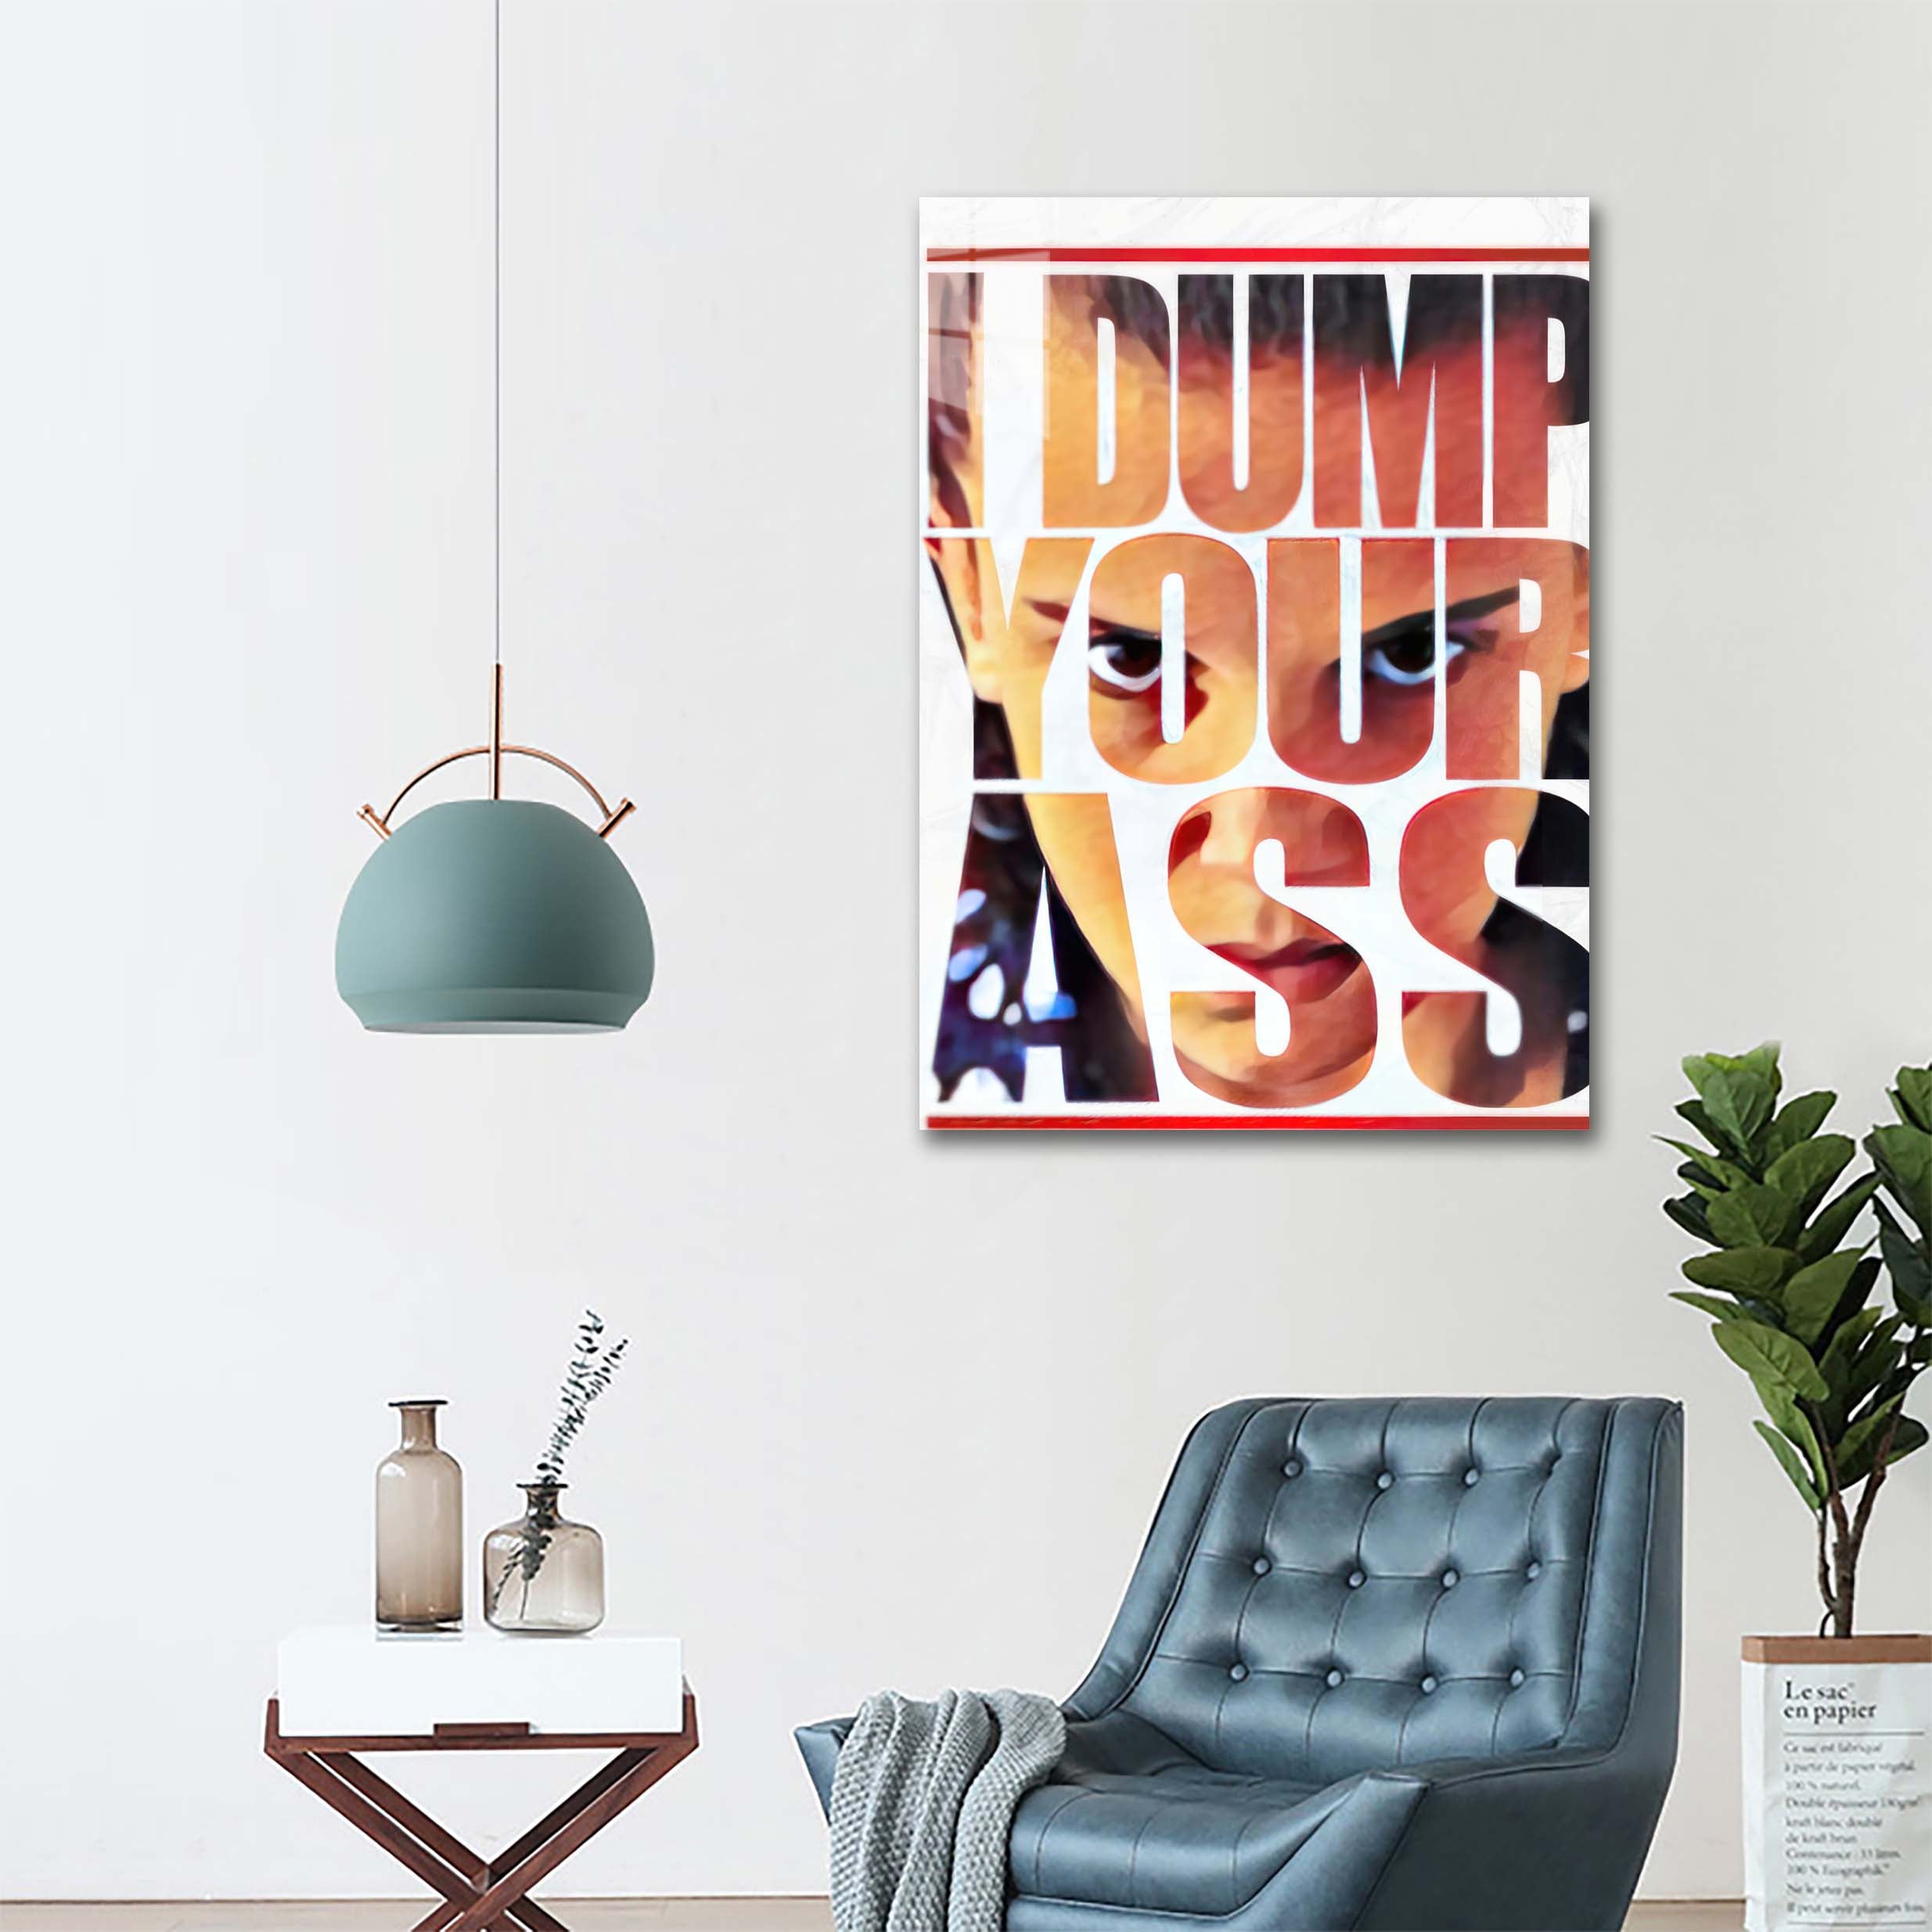 I Dump your ass-designed by @Vinahayum